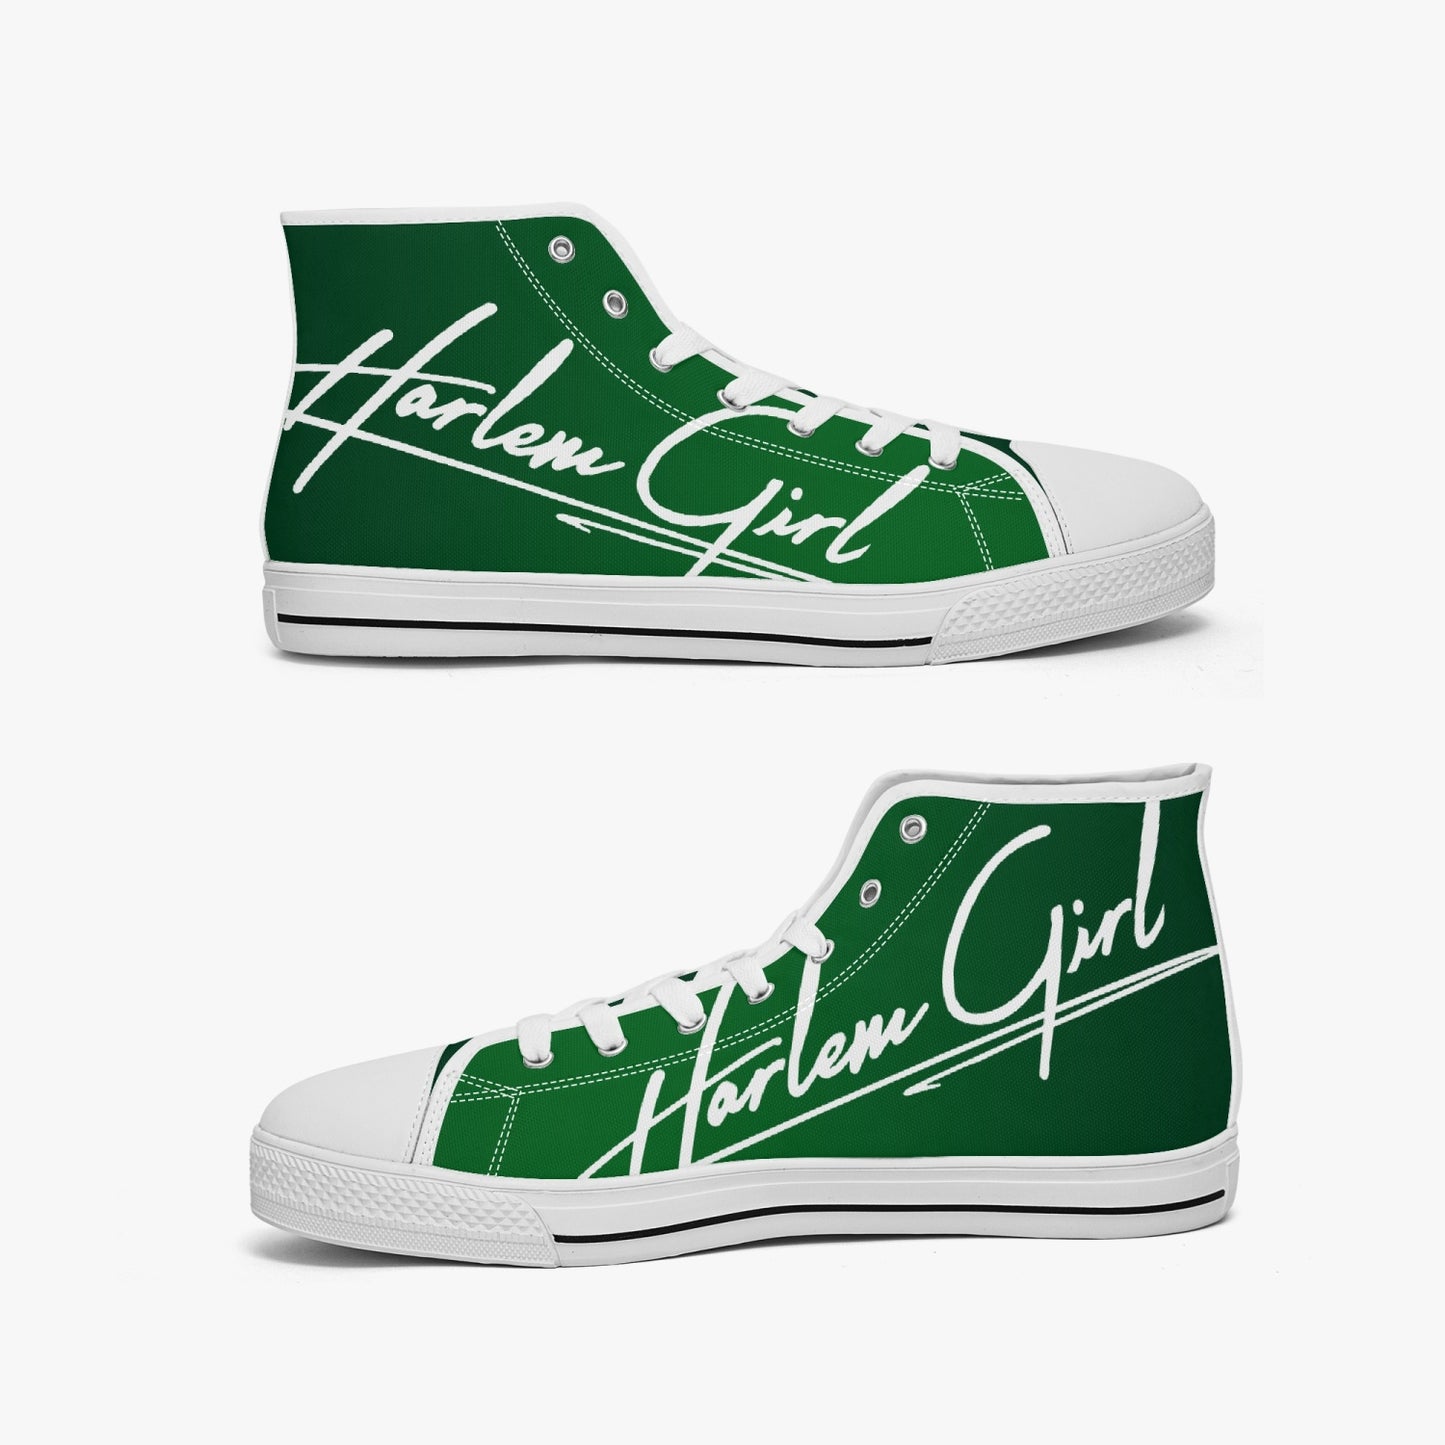 HB Harlem Girl "Lenox Ave" Classic High Top - Emerald - Women (Black or White Soles)